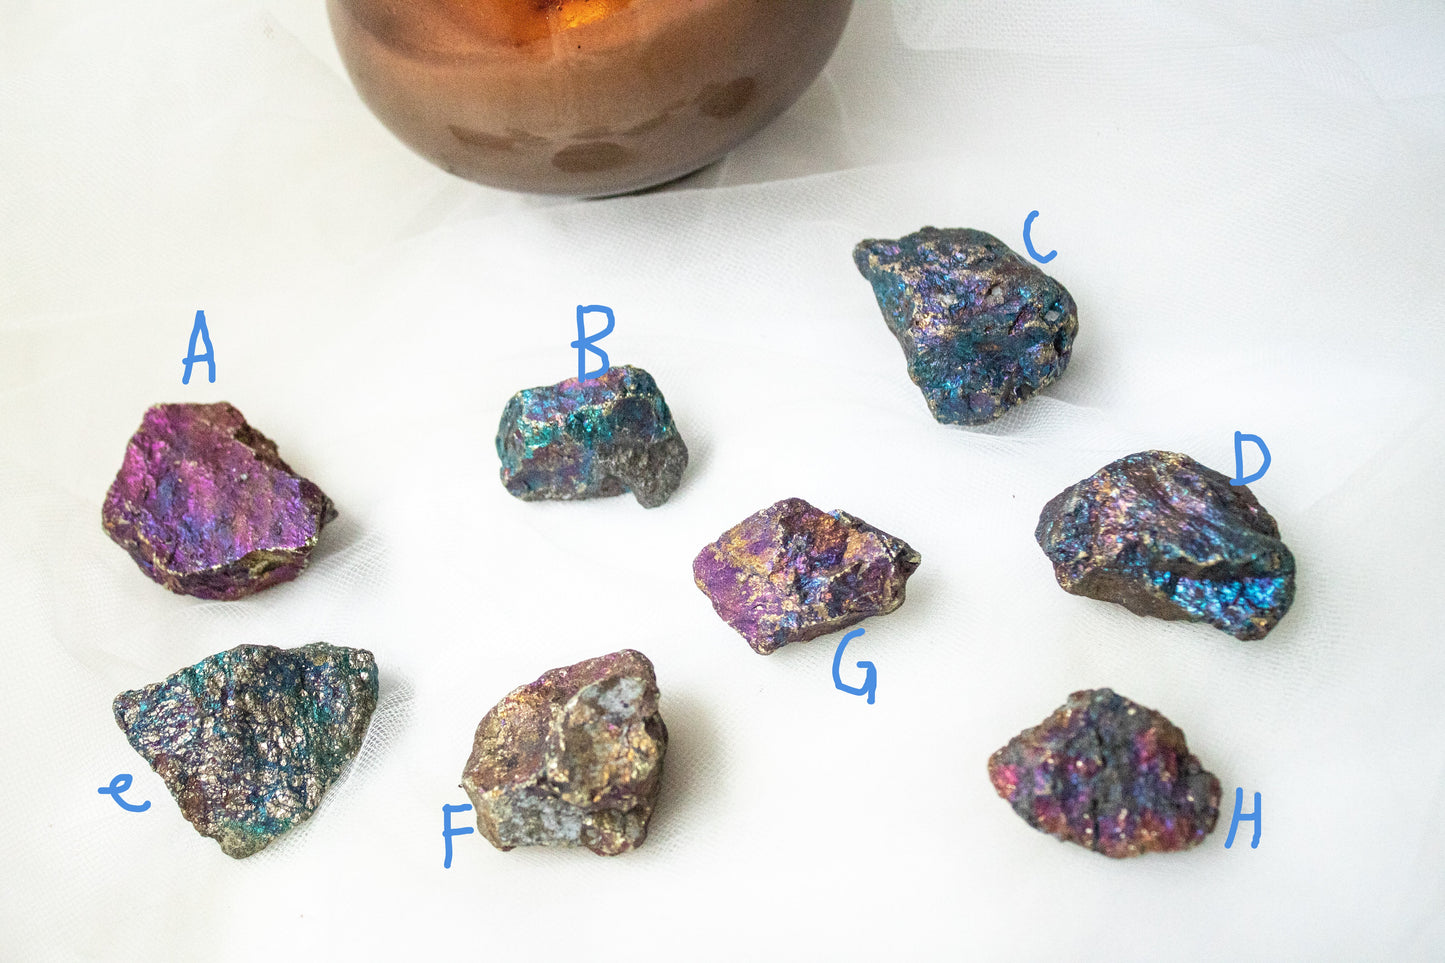 Chalcopyrite or rustic bornite pieces